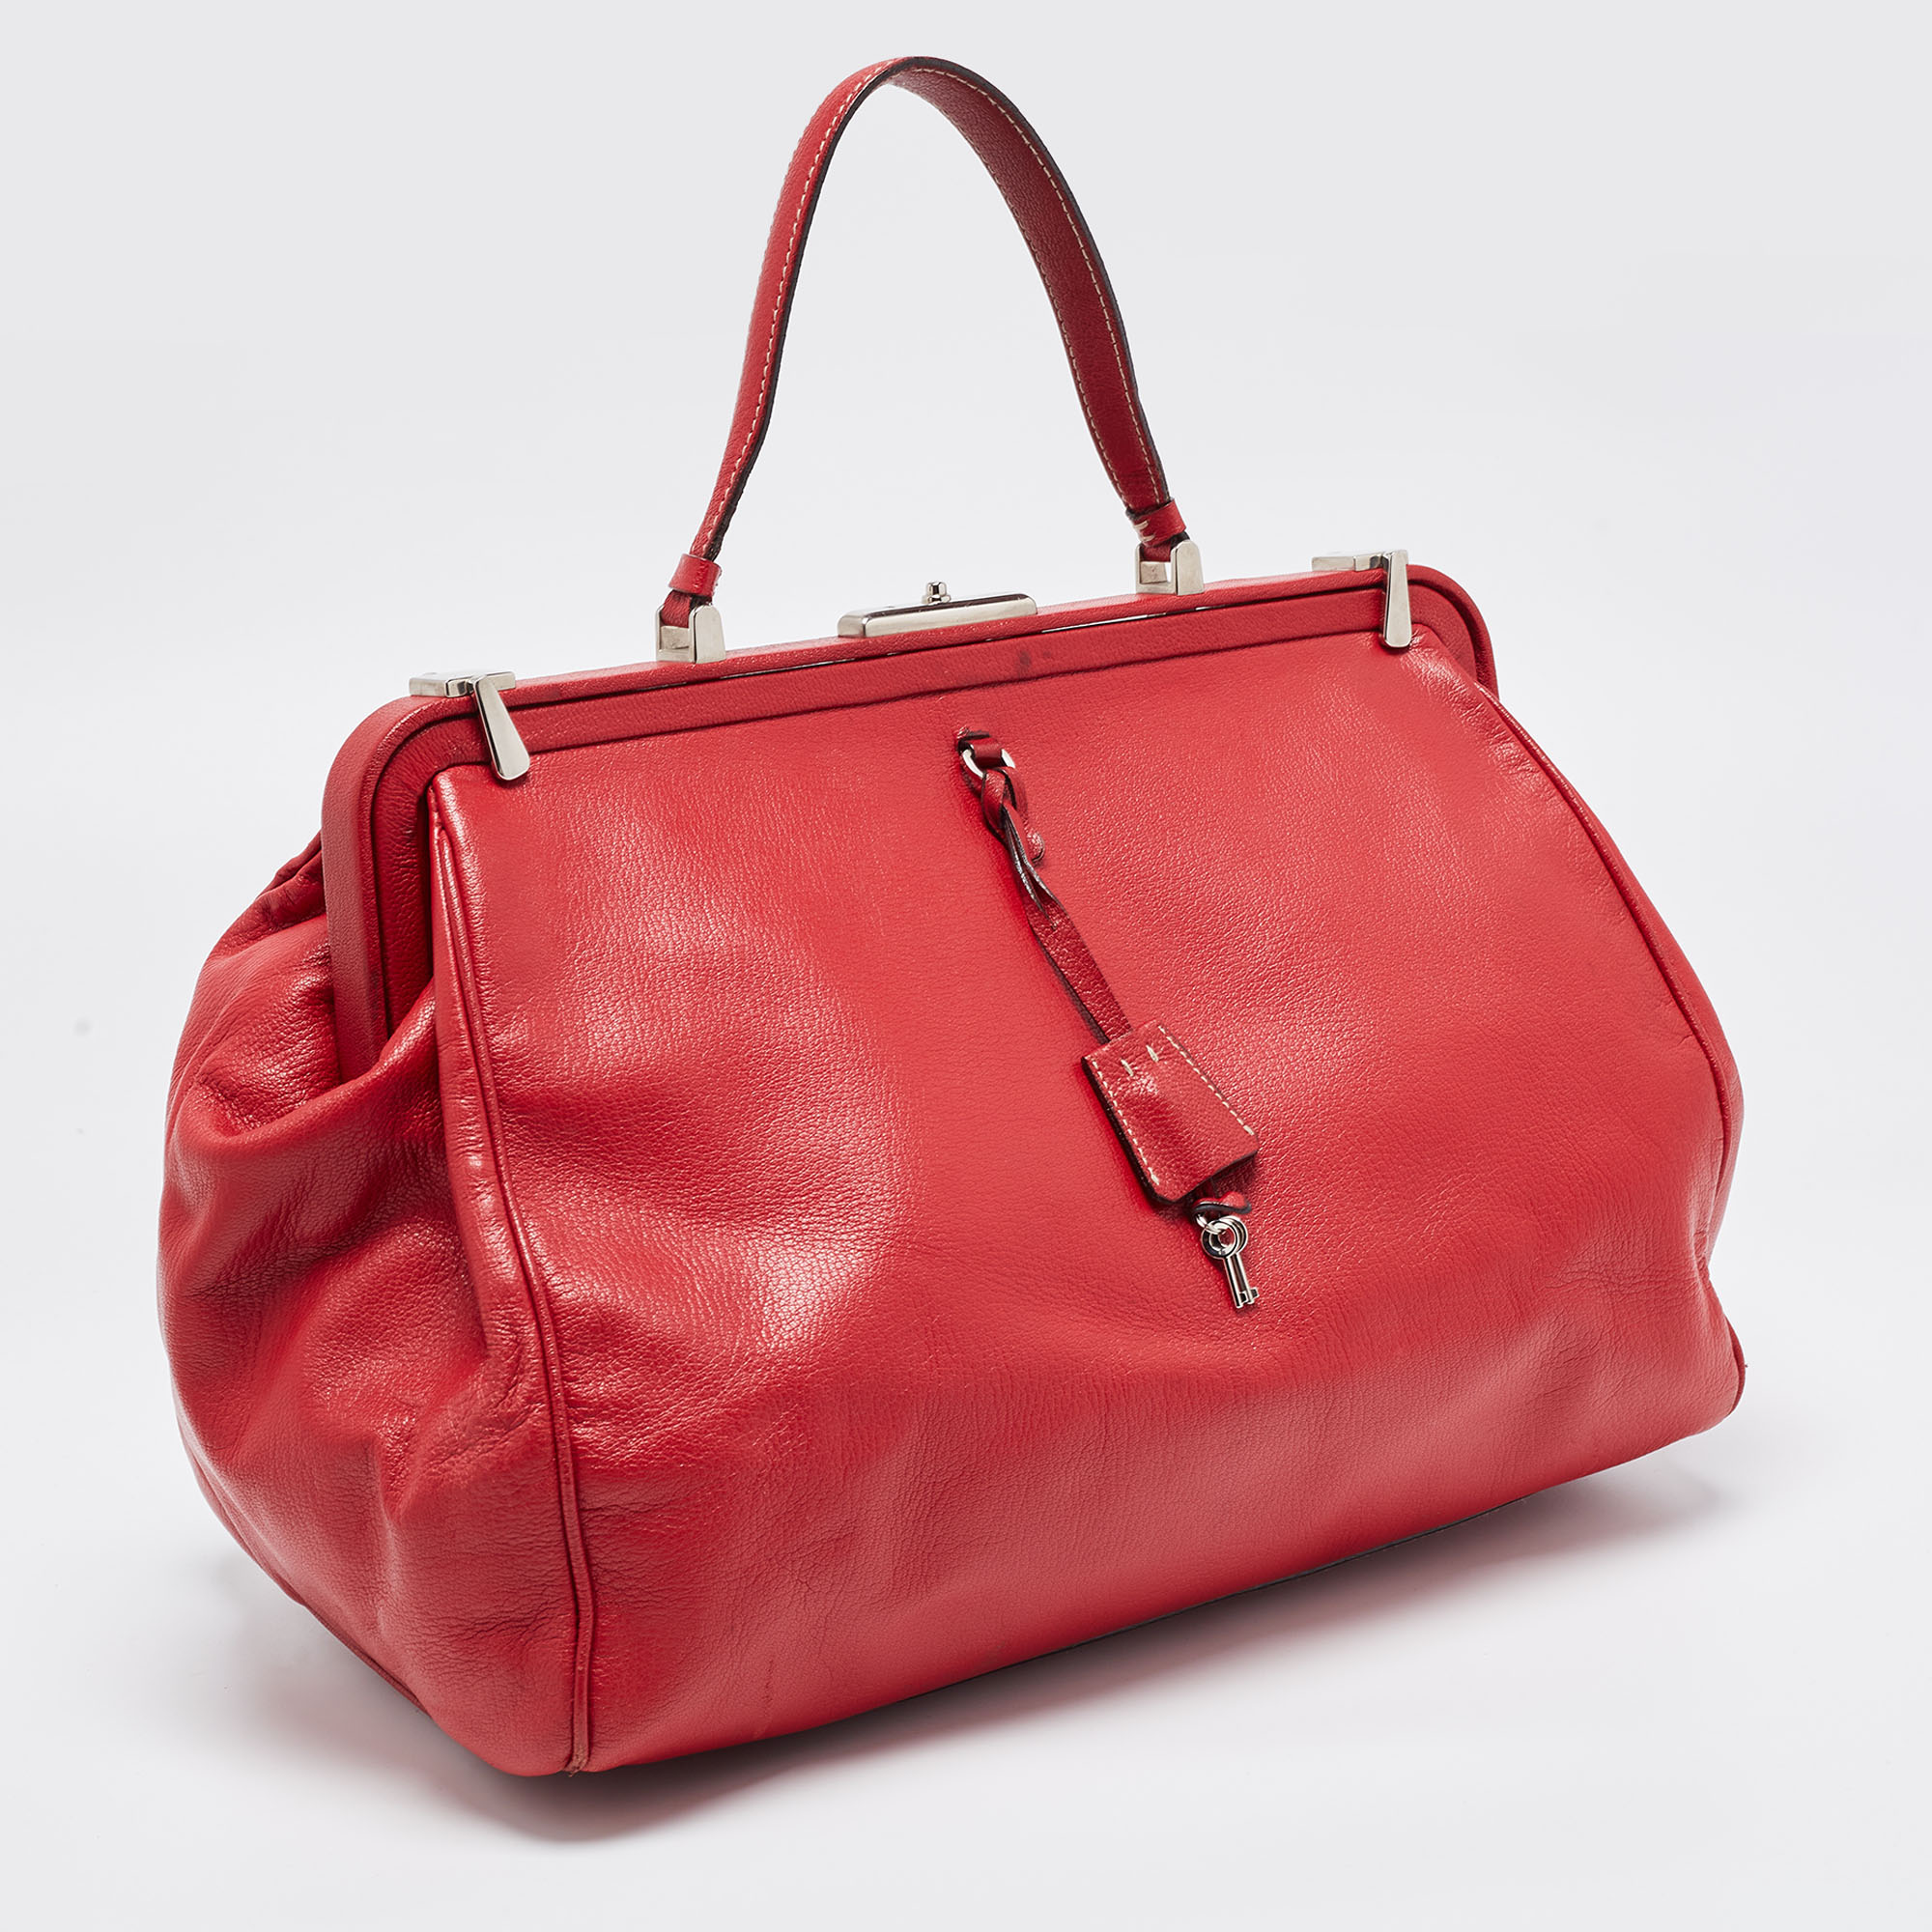 Prada Red Leather Spazzolato Frame Top Handle Bag